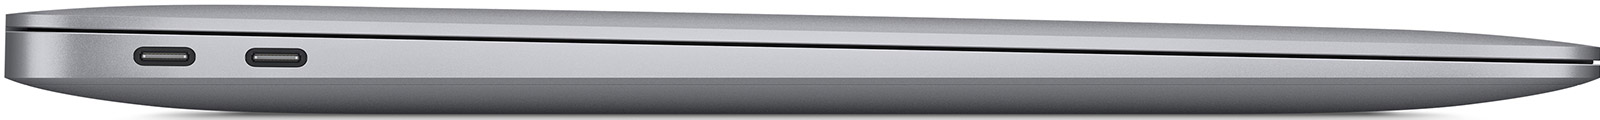 Apple-MacBook-Air-13-3-M1-8-Core-16-GB-1-TB-8-Core-Grafik-Space-Grau-US-Amerika-05.jpg